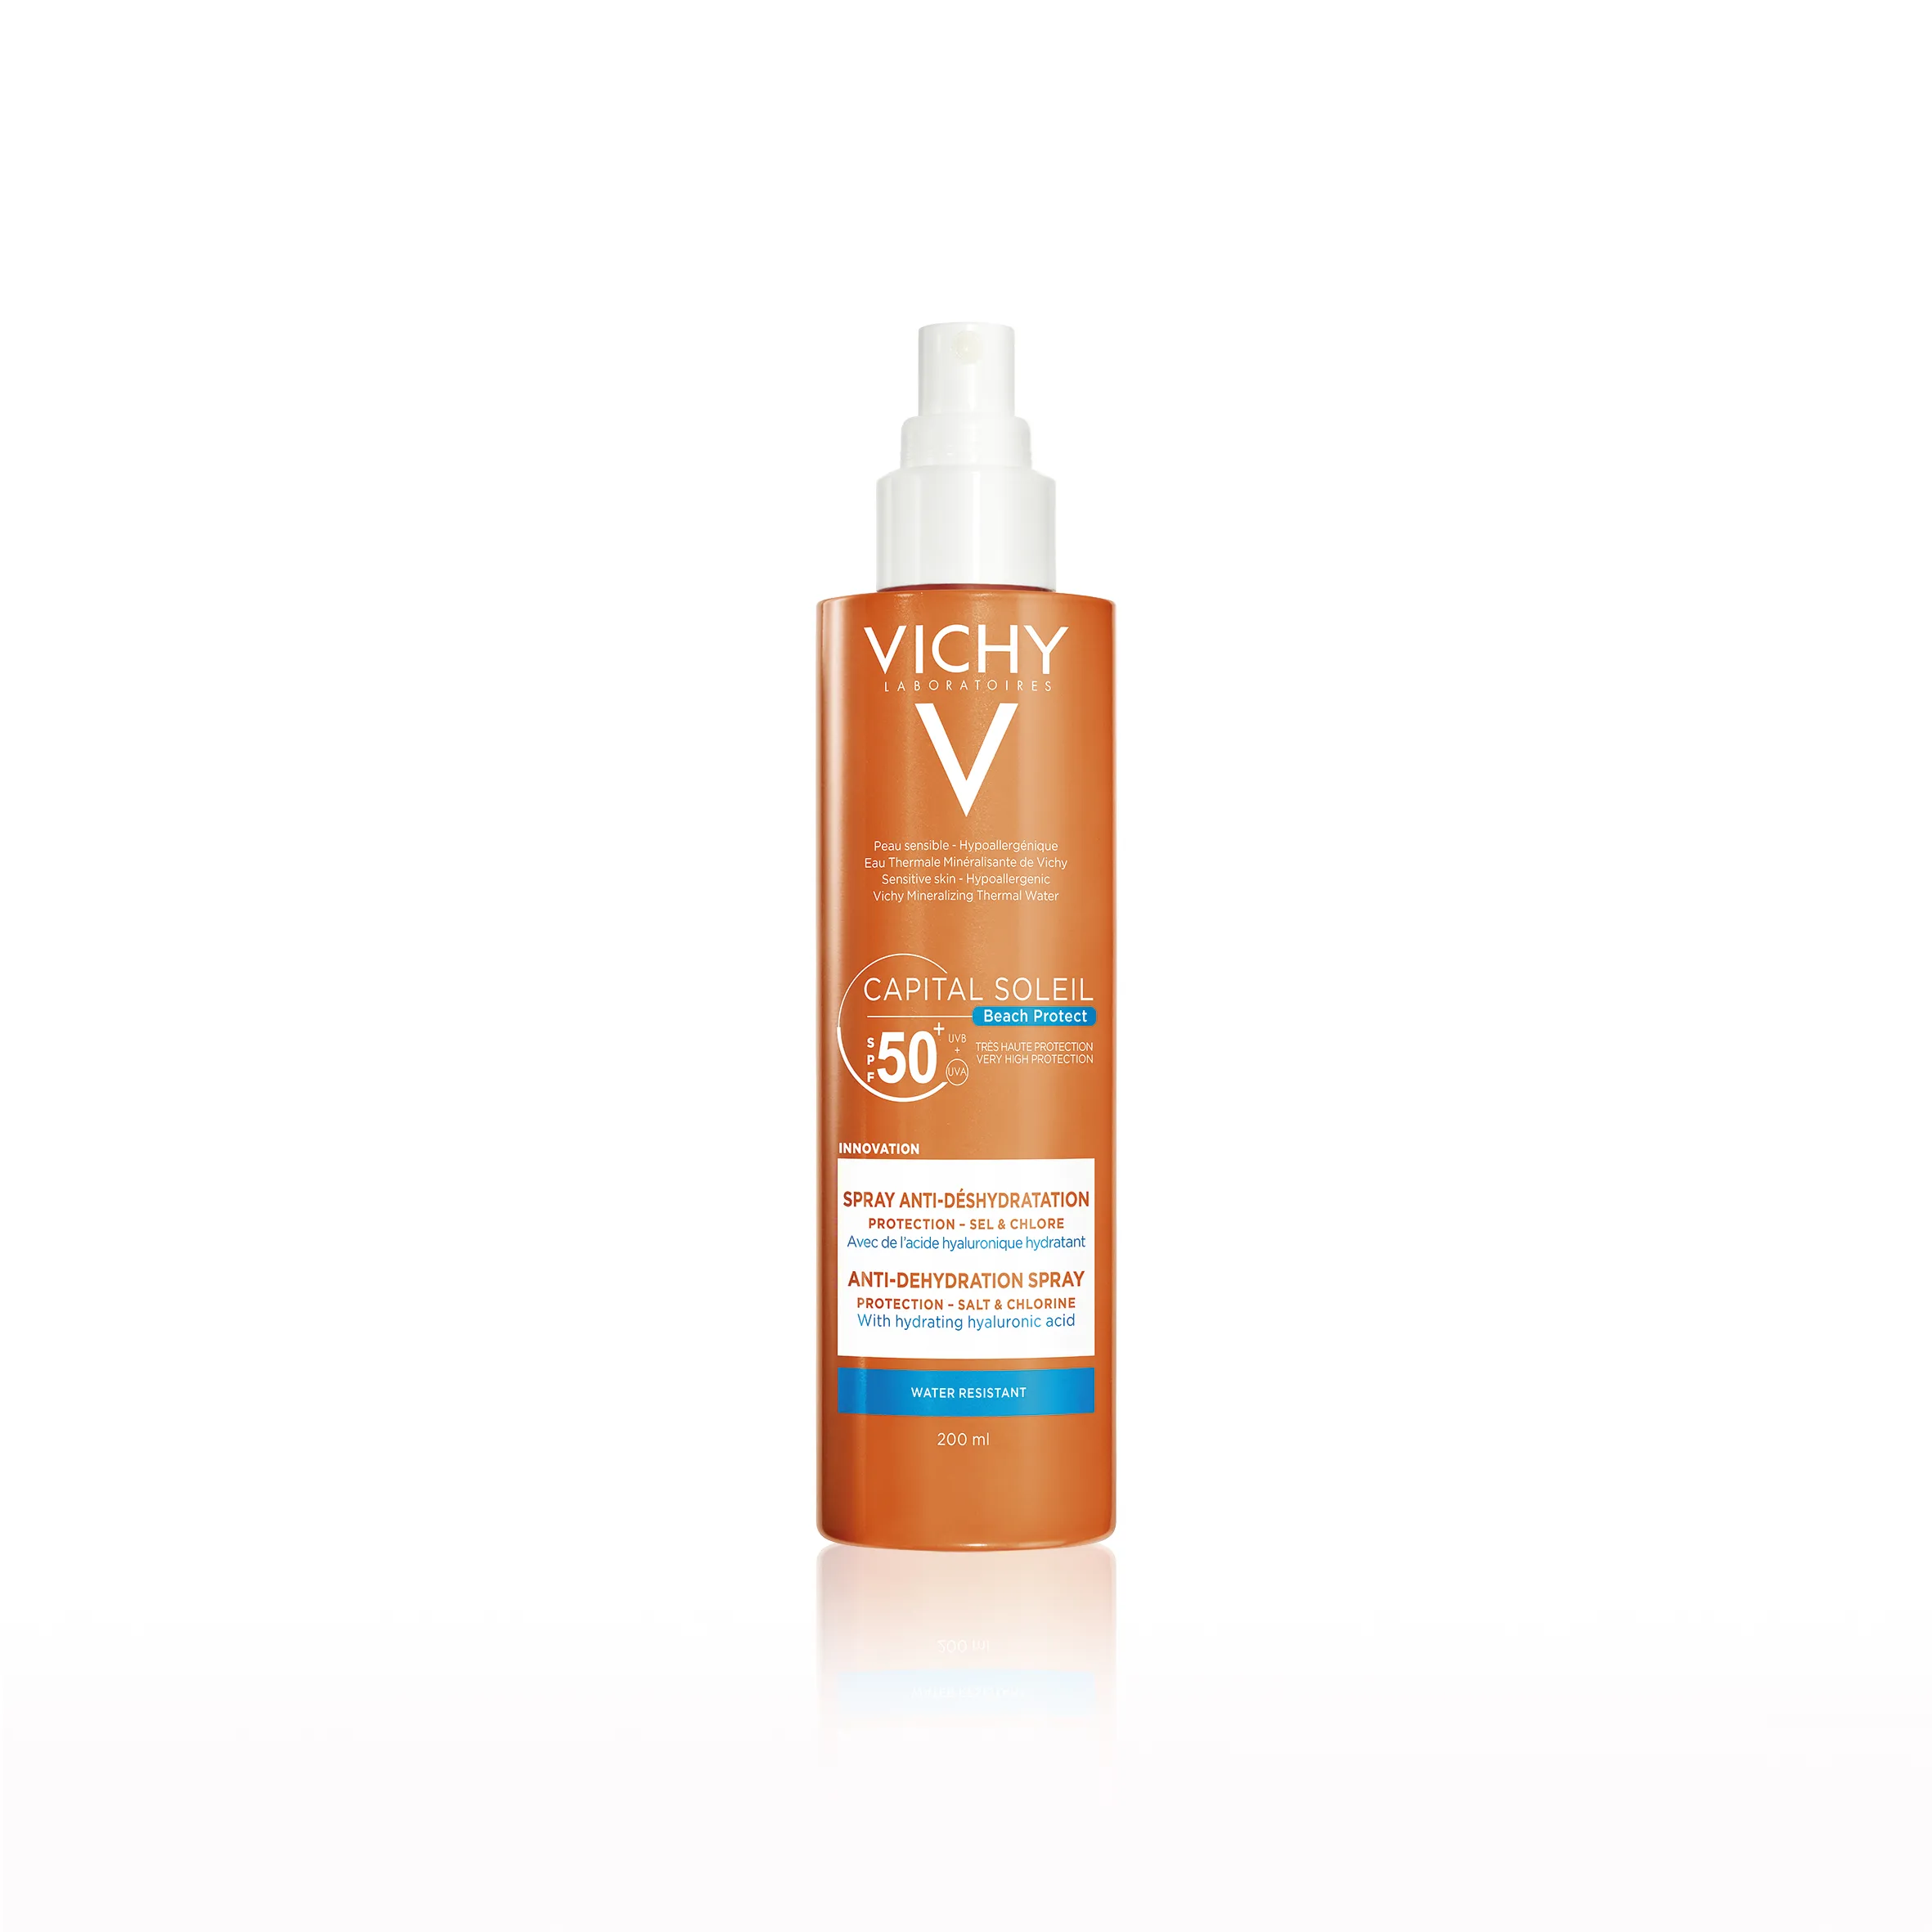 Vichy Capital Soleil, spray ochronny z kwasem hialuronowym, spf50+, 200 ml